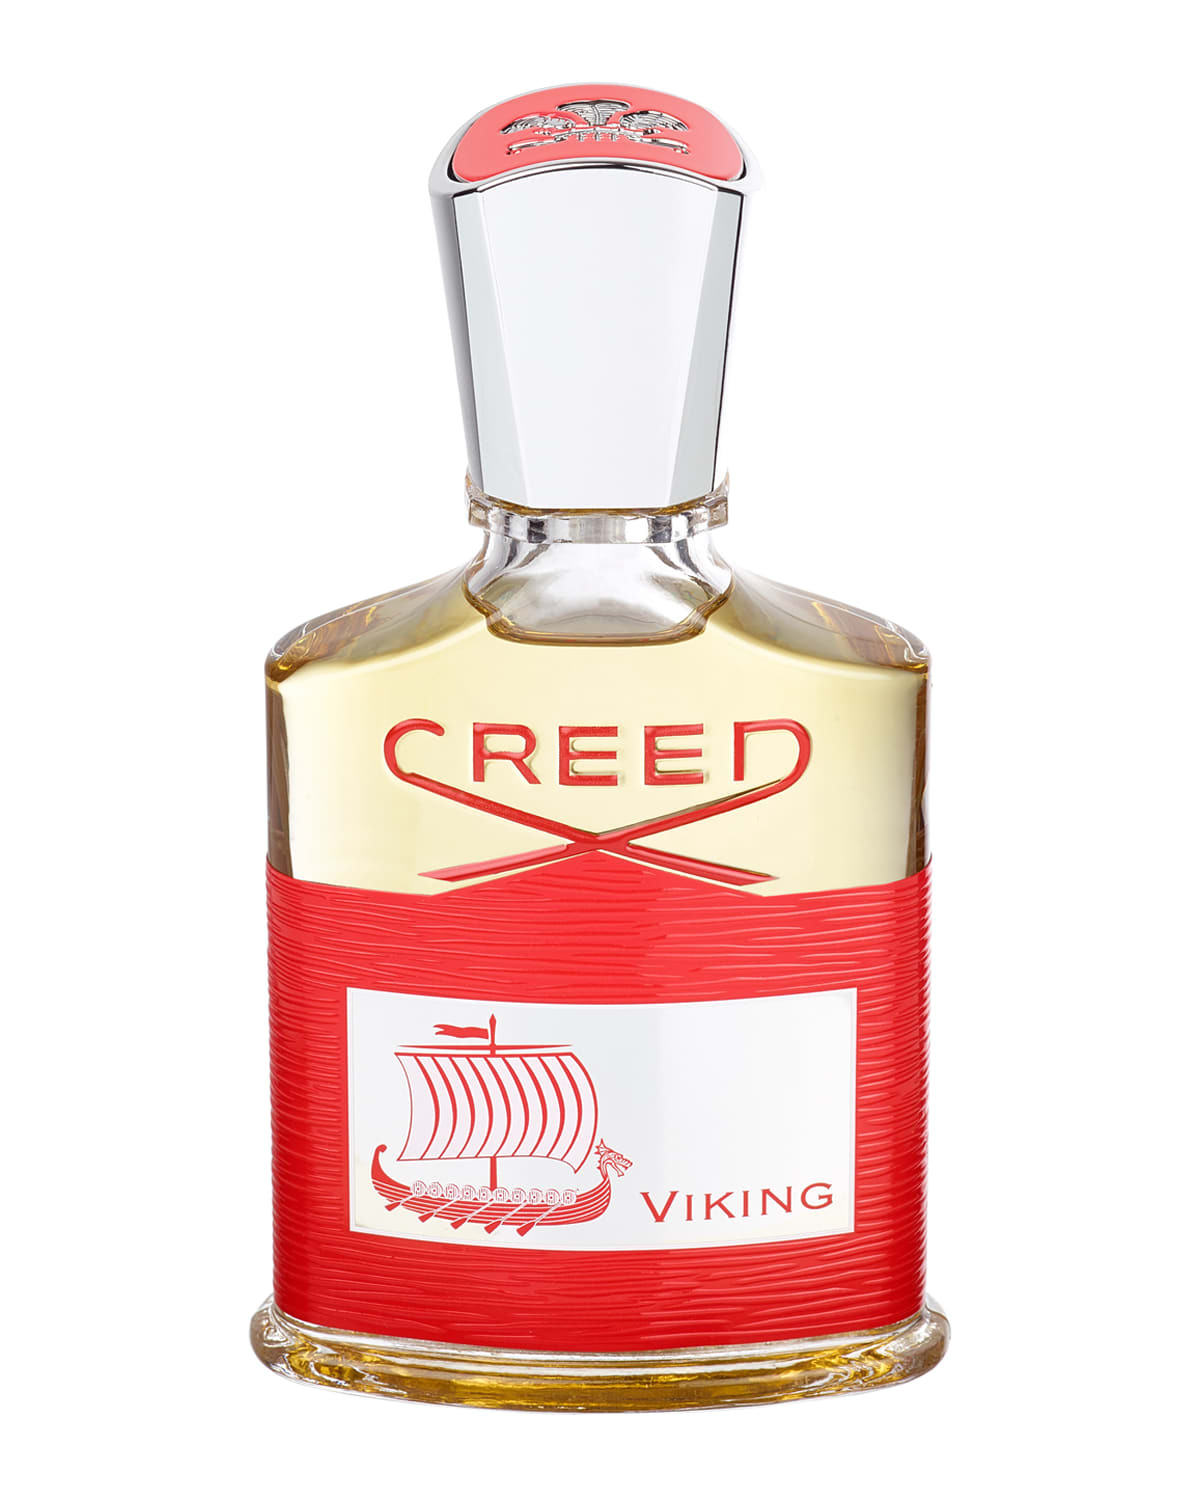 Creed Viking, 1.7 oz./ 50 mL